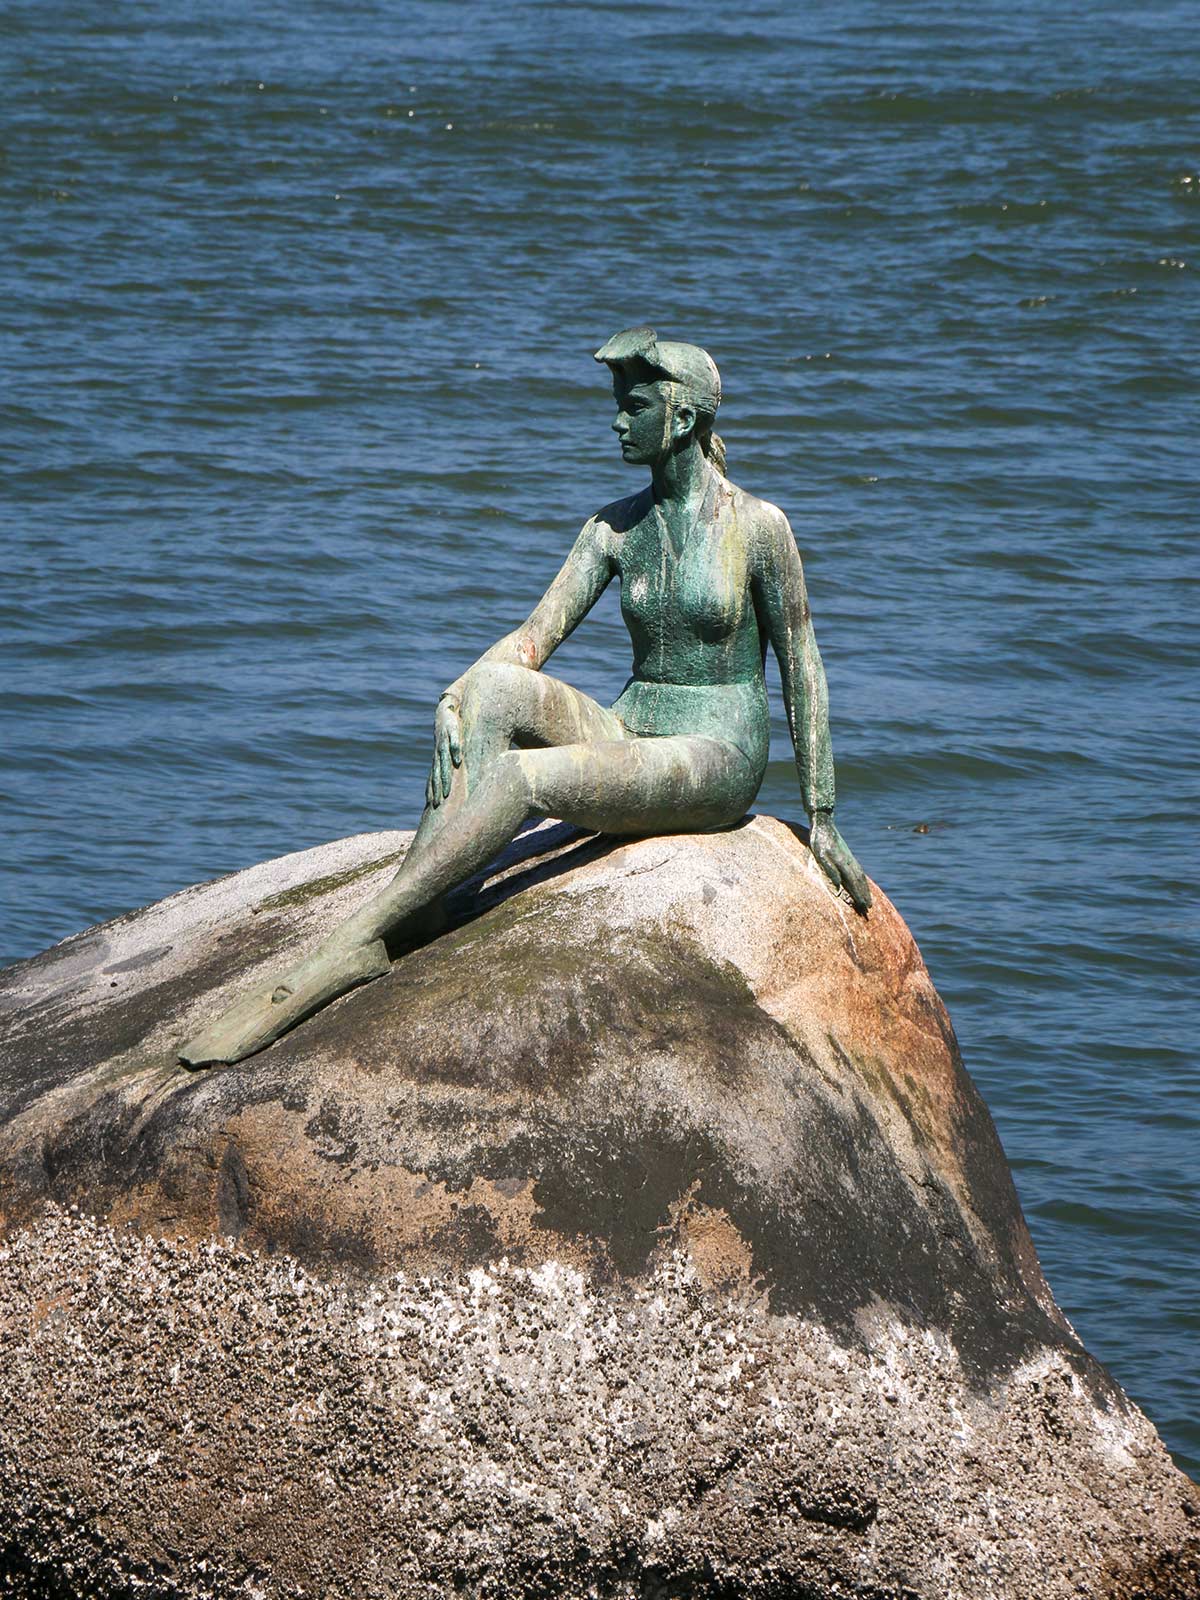 Statue de la fille en maillot, Seawall, Parc Stanley, Vancouver, Colombie-Britannique, Canada / Girl in a Wetsuit Statue, Seawall, Stanley Park, Vancouver, BC, Canada